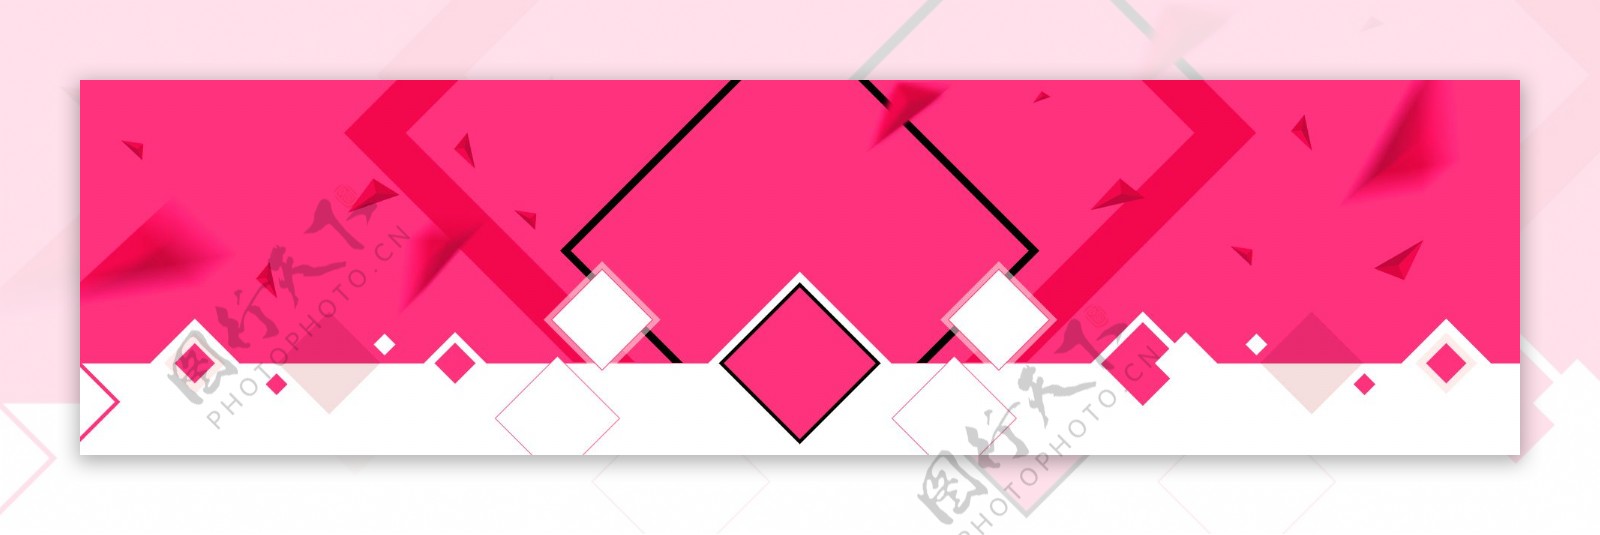 粉色菱形几何淘宝全屏banner背景